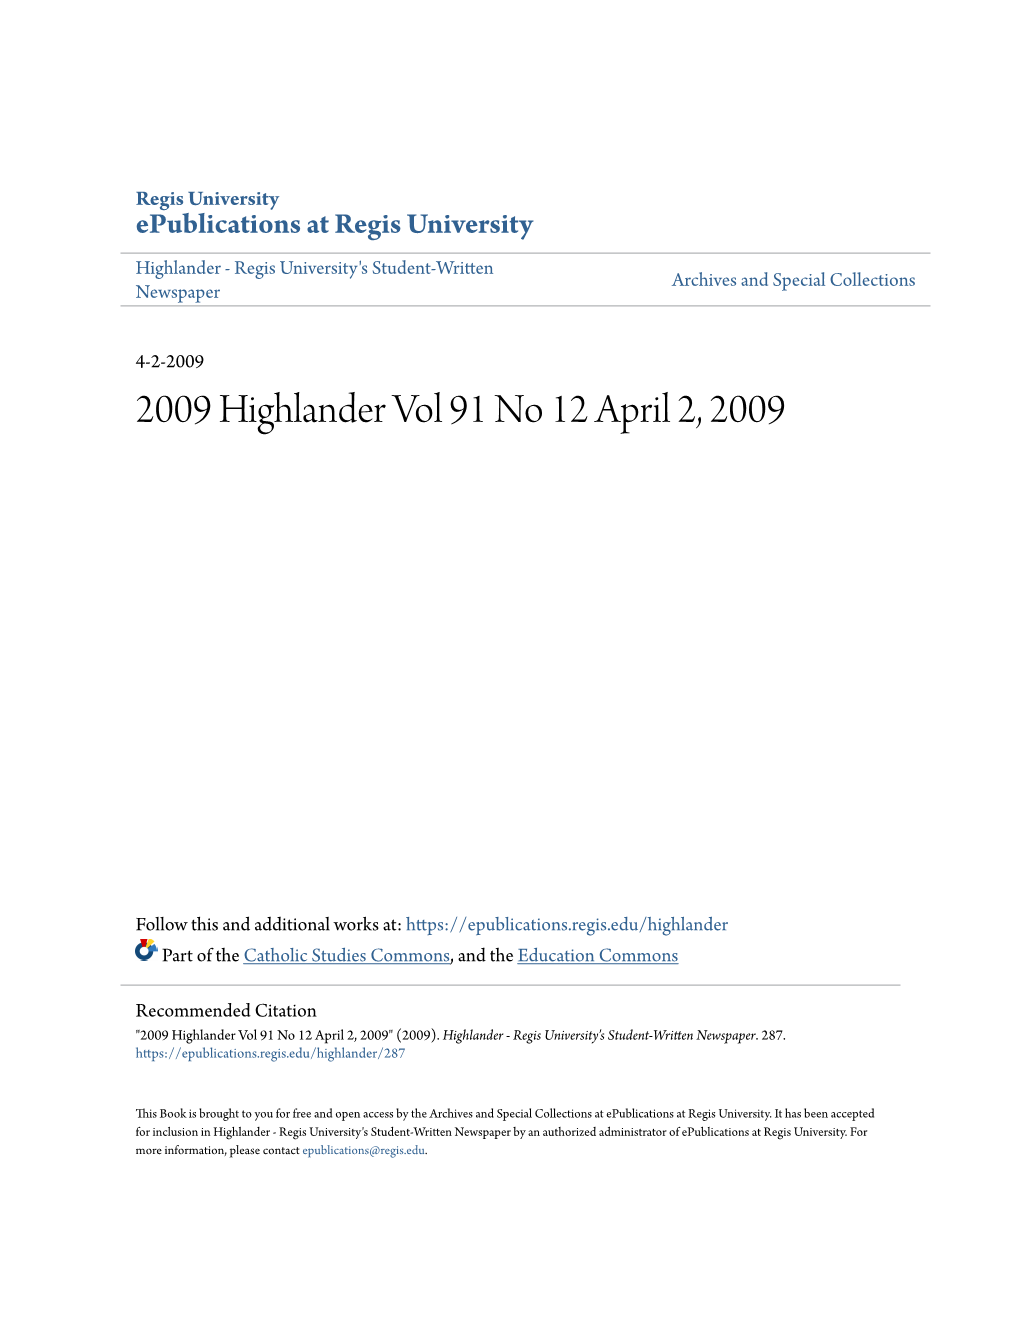 2009 Highlander Vol 91 No 12 April 2, 2009